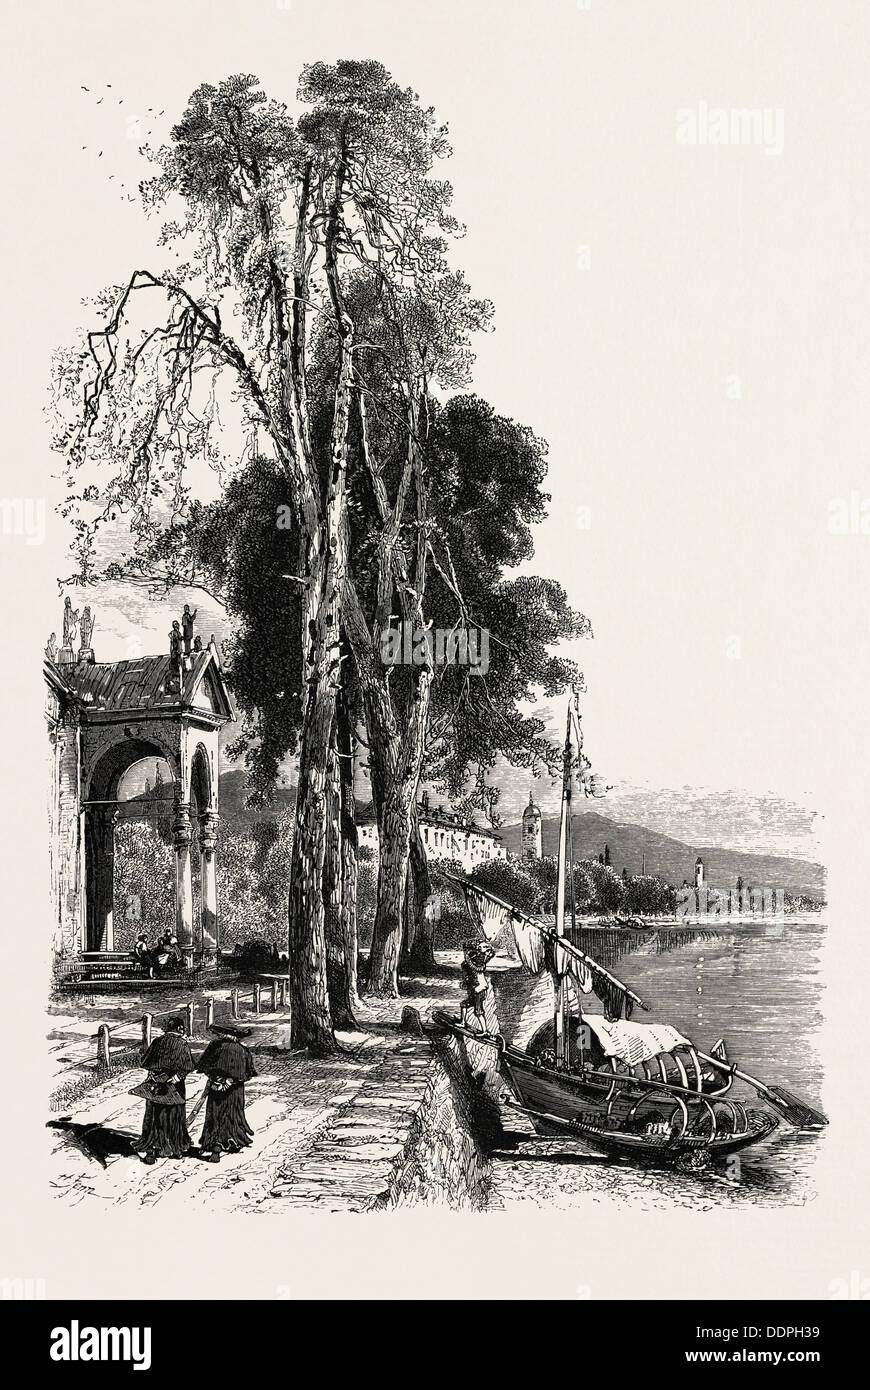 Luino, Lago Maggiore, the Italian lakes, Italy, 19th century engraving Stock Photo